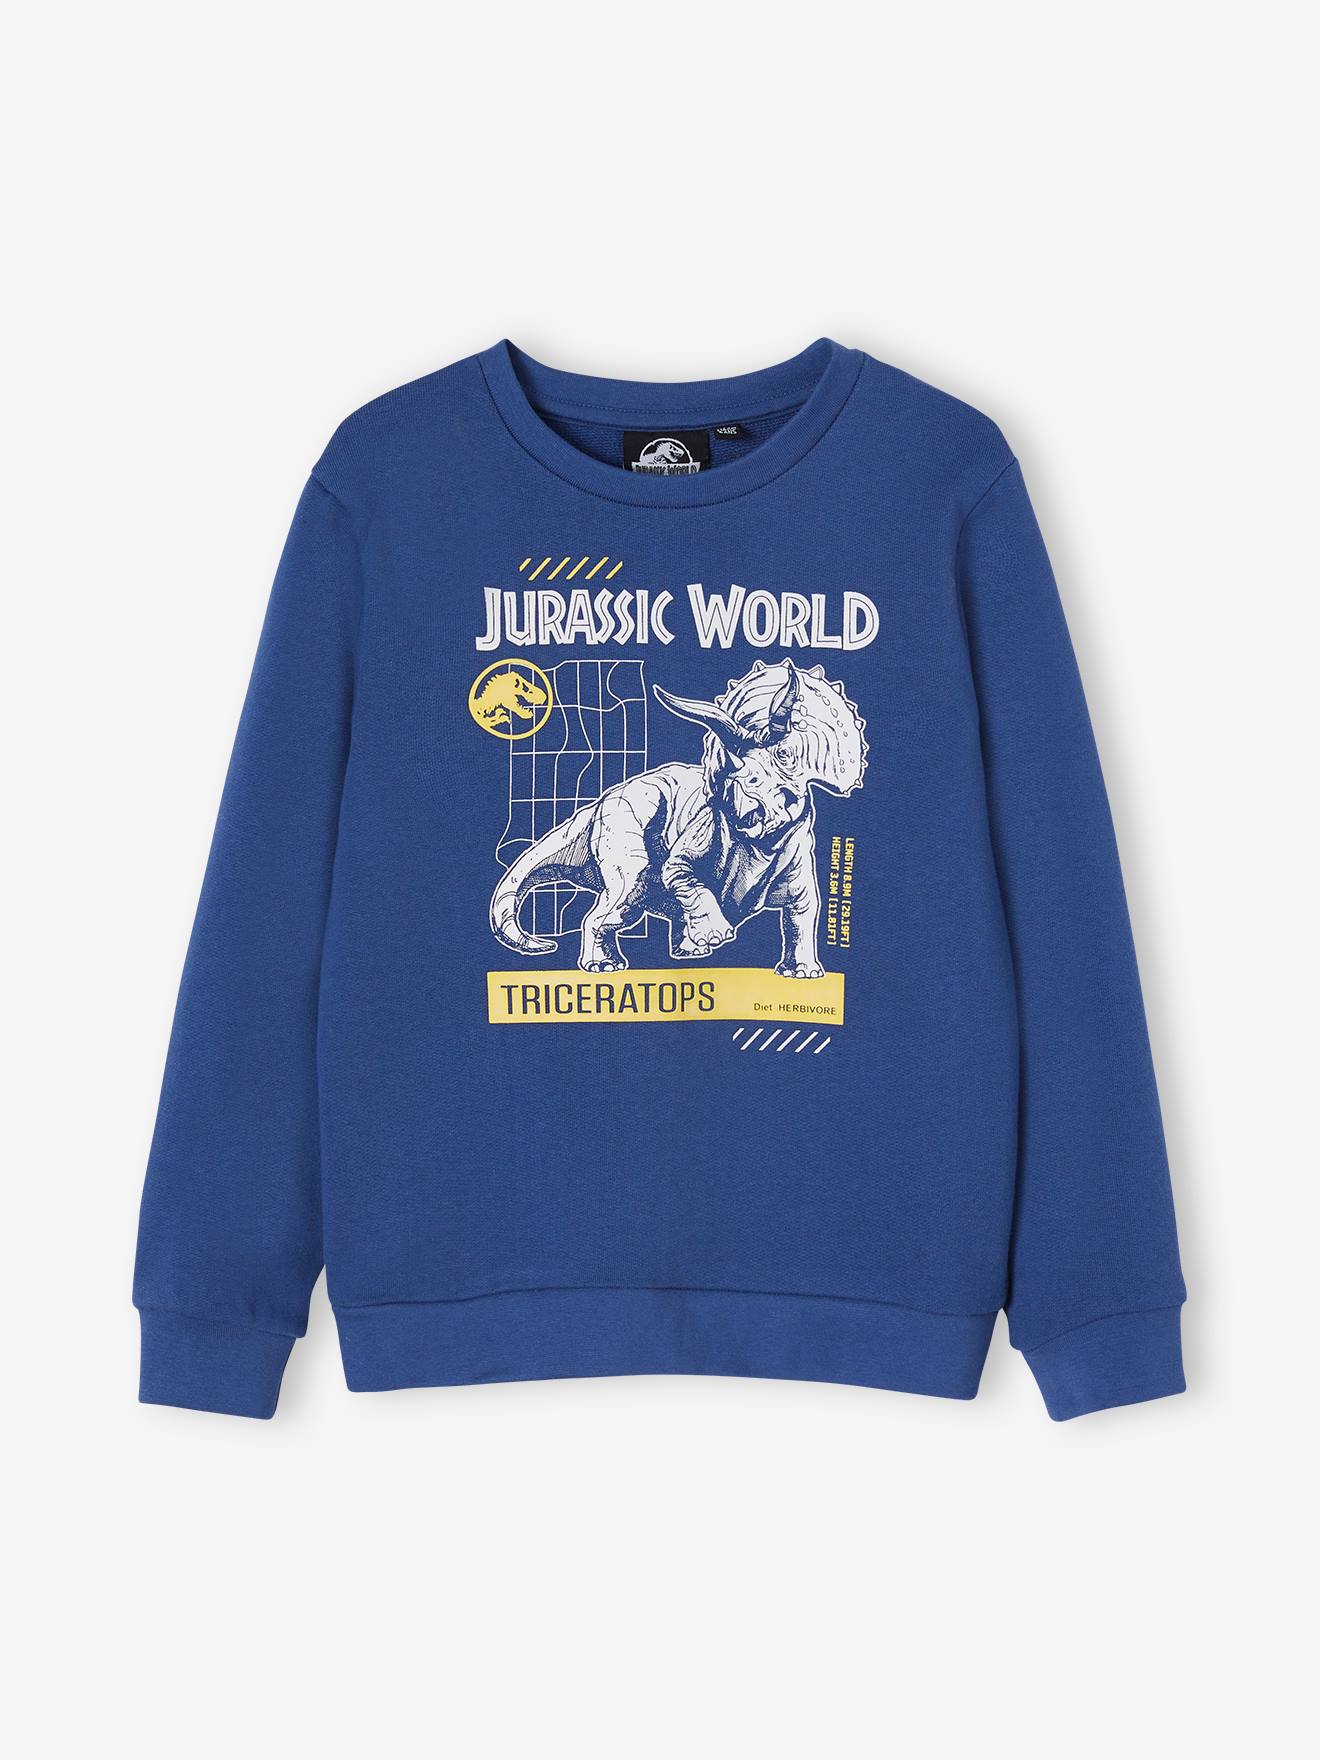 Jongenssweater Jurassic World¨ leiblauw